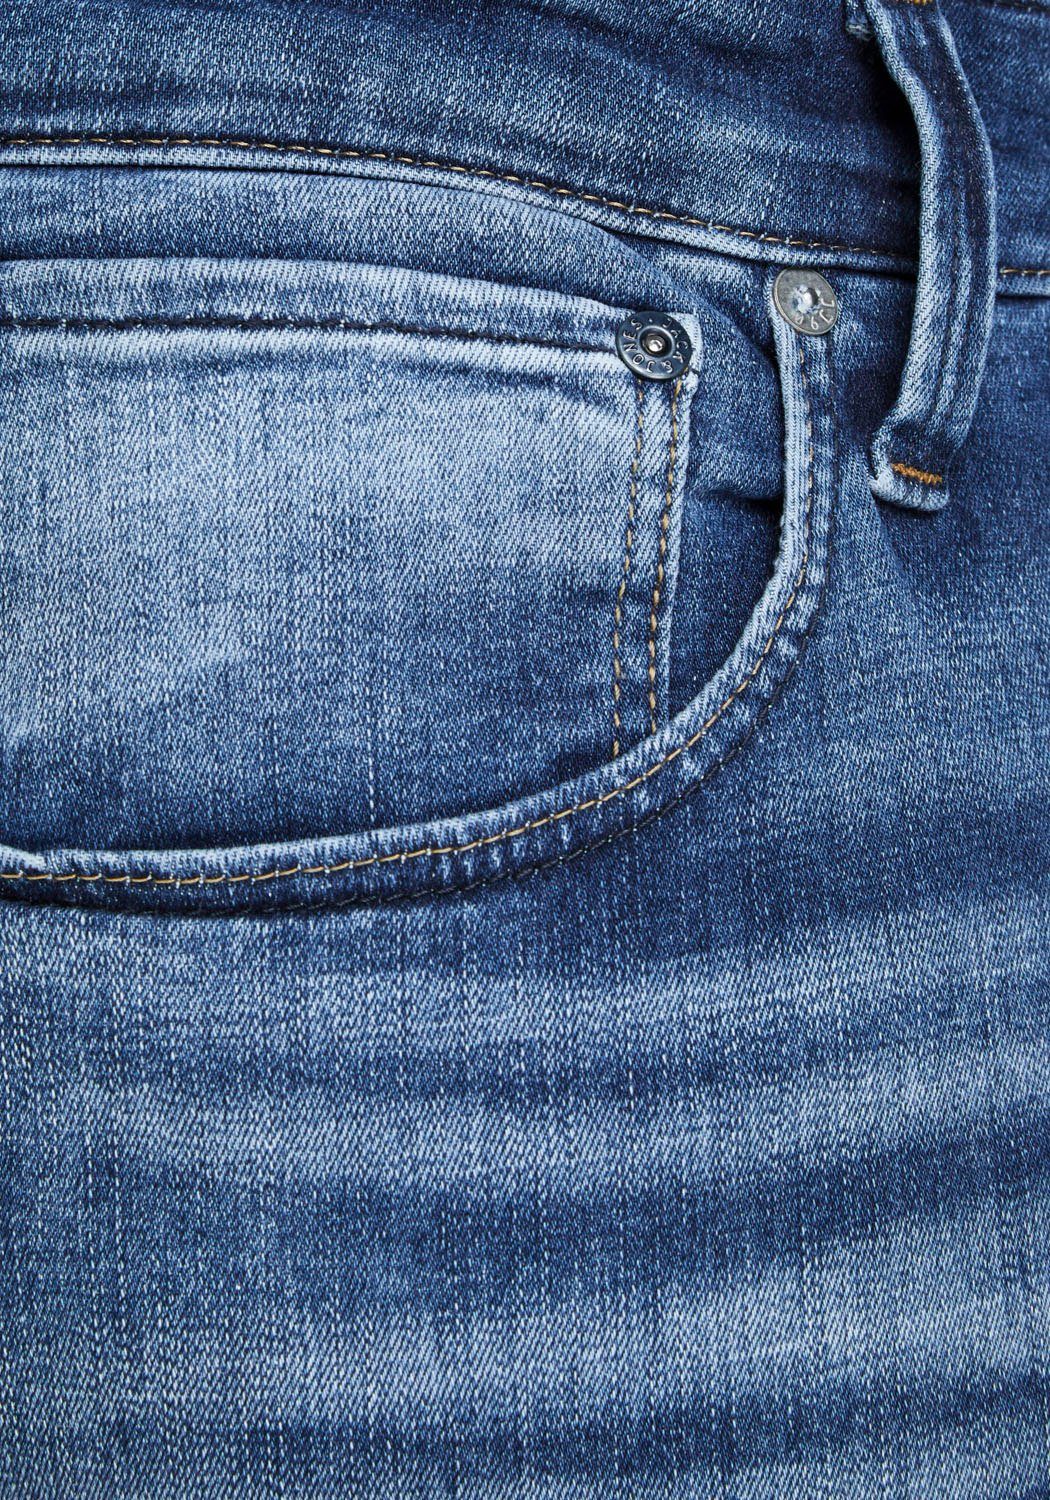 Slim-fit-Jeans Jeans Jones mittelblau 52 & Icon Tim Jack bis PlusSize Weite